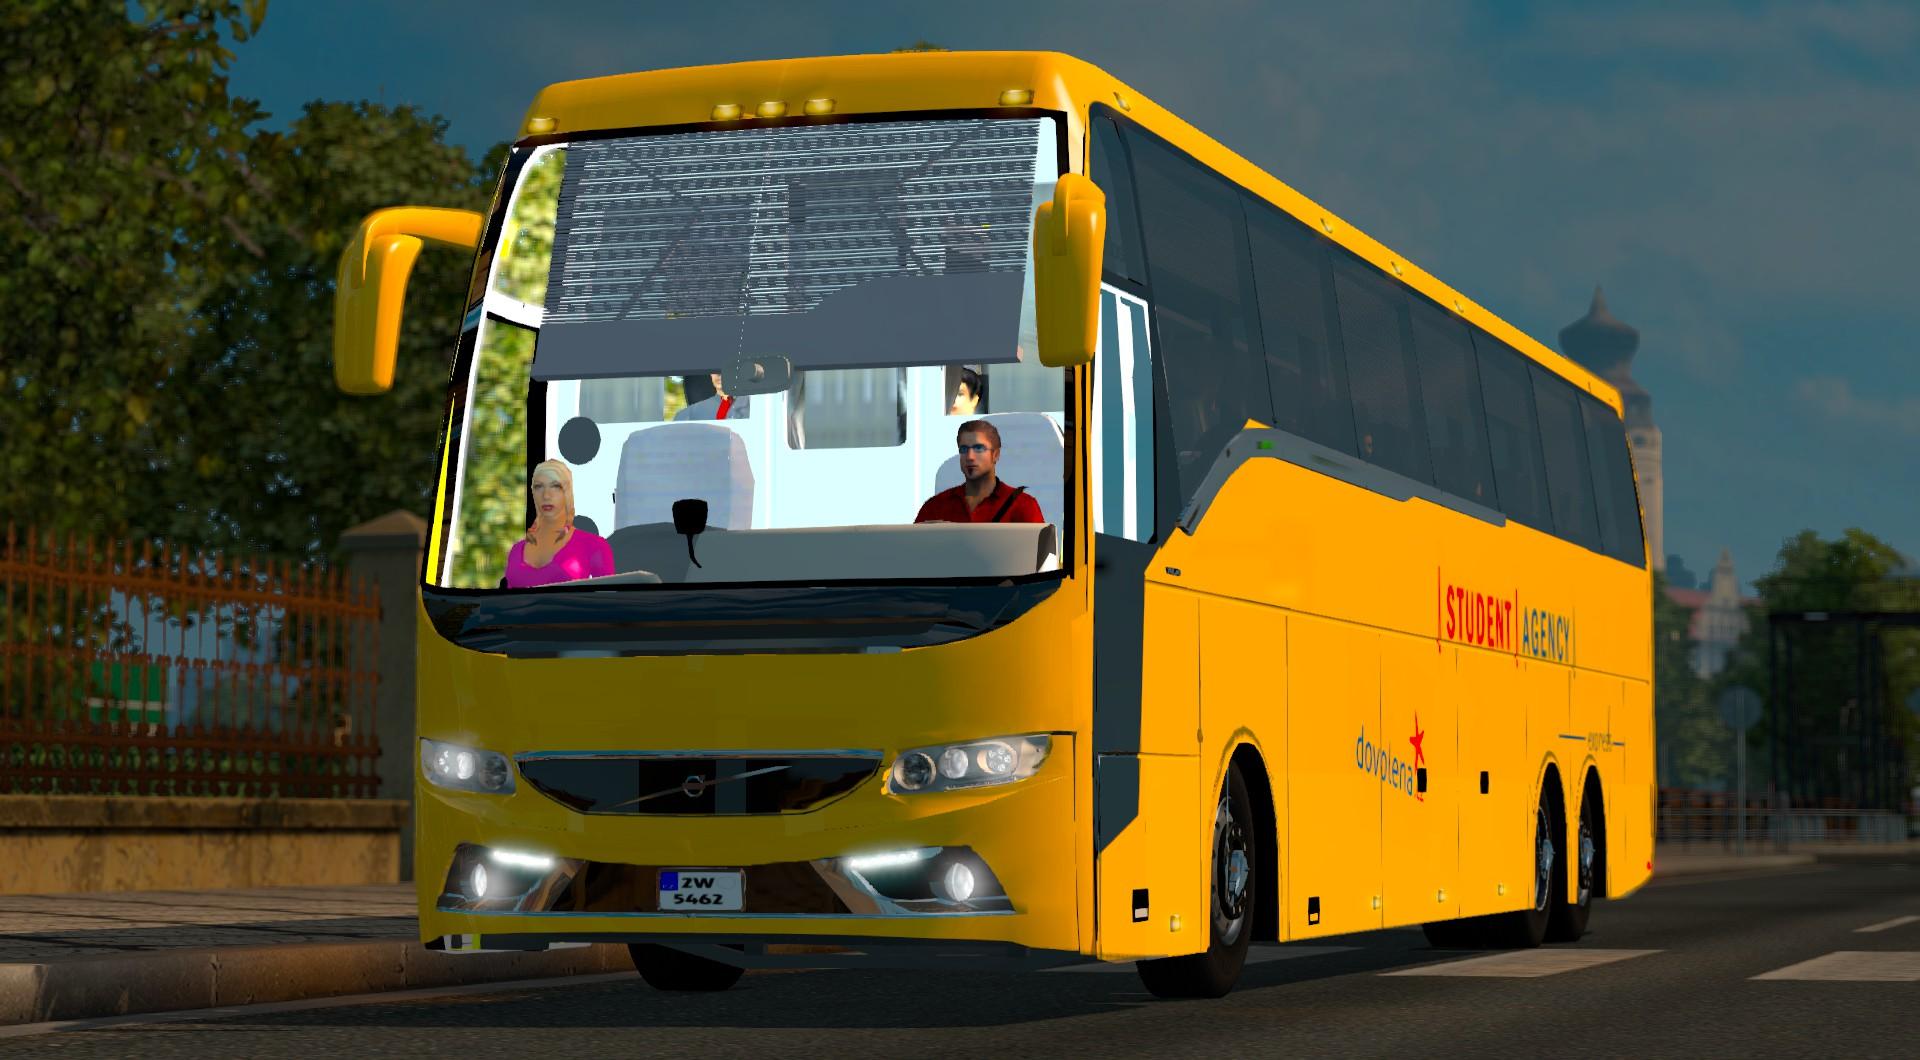 bus simulator 16 pc mods